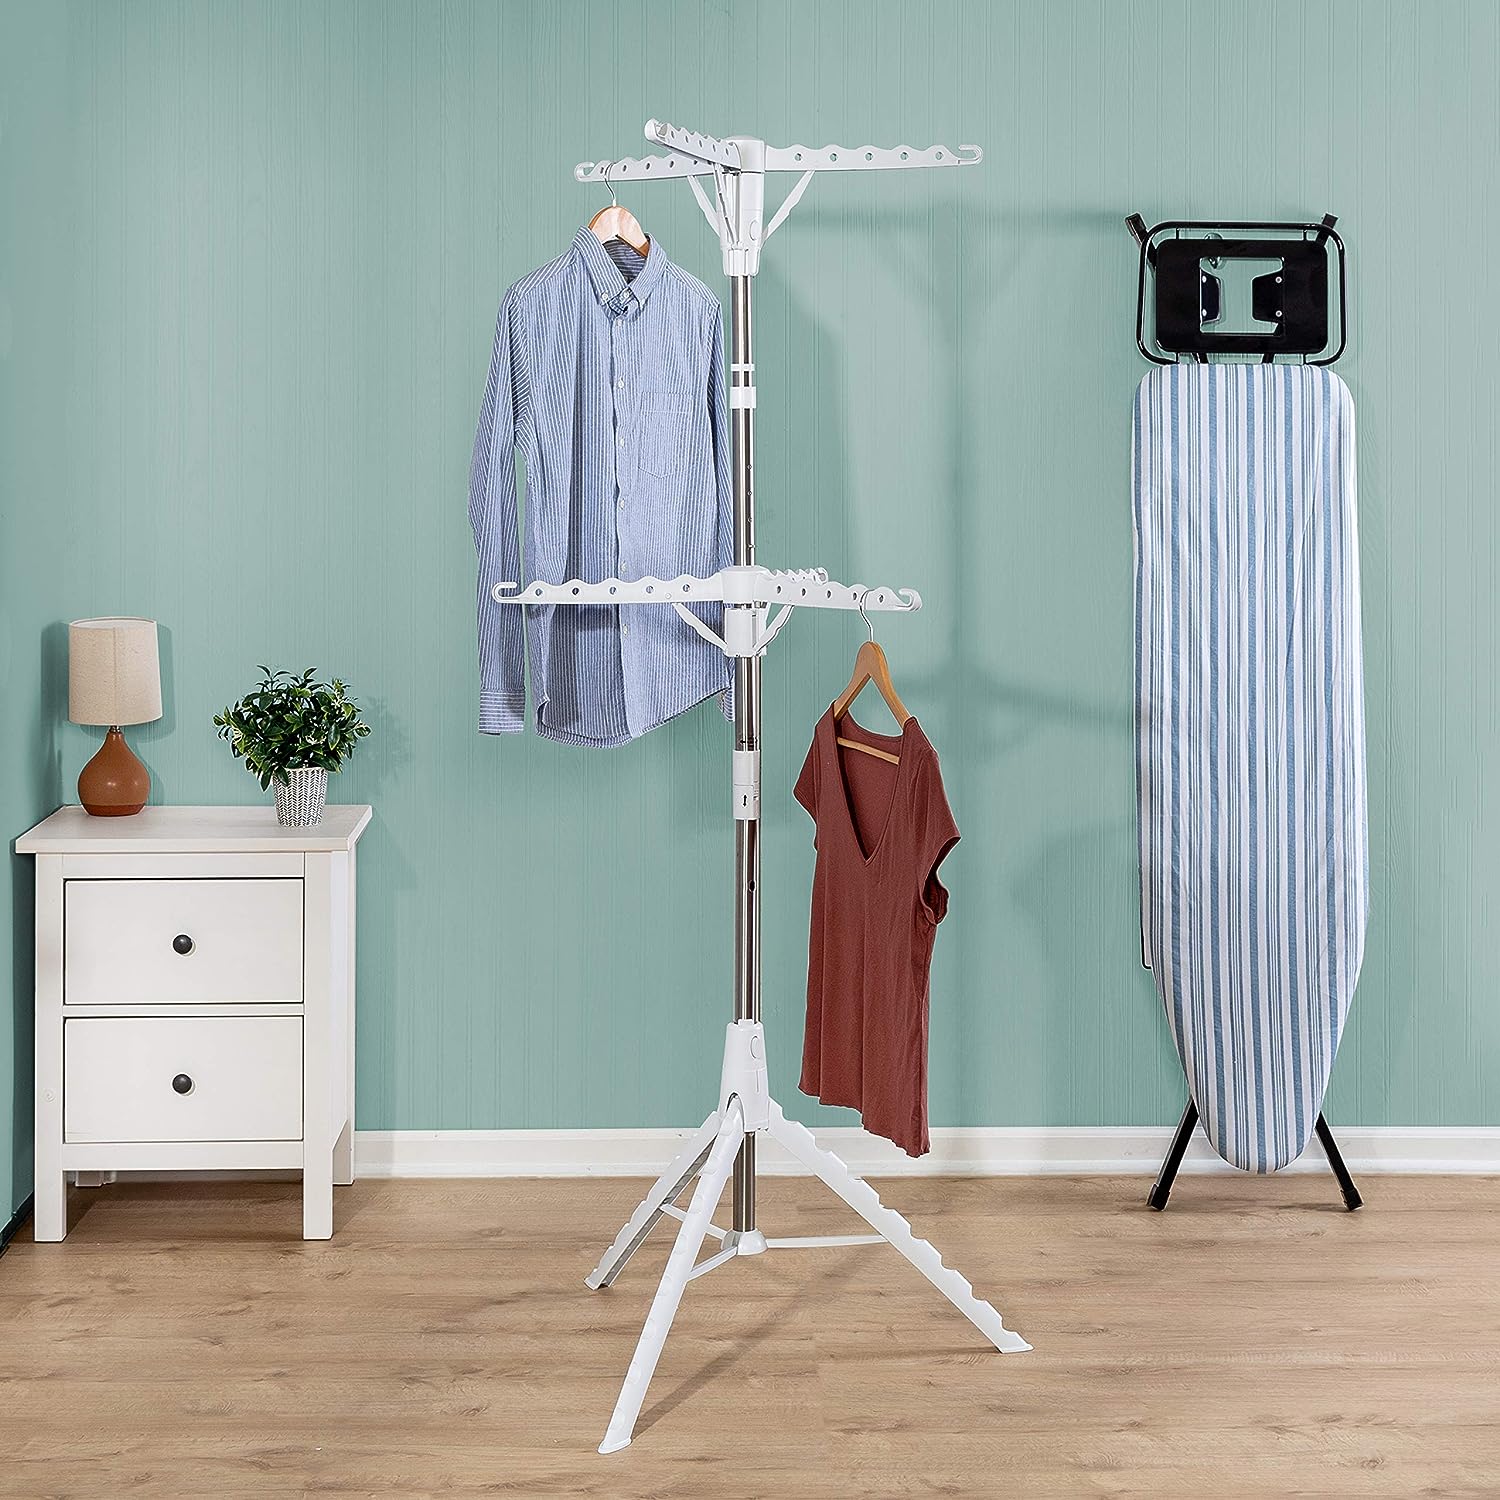   Basics Foldable Laundry Rack for Air Drying Clothing,  41.8 x 29.5 x 14.5 (L x W x H), Chrome Silver : Home & Kitchen